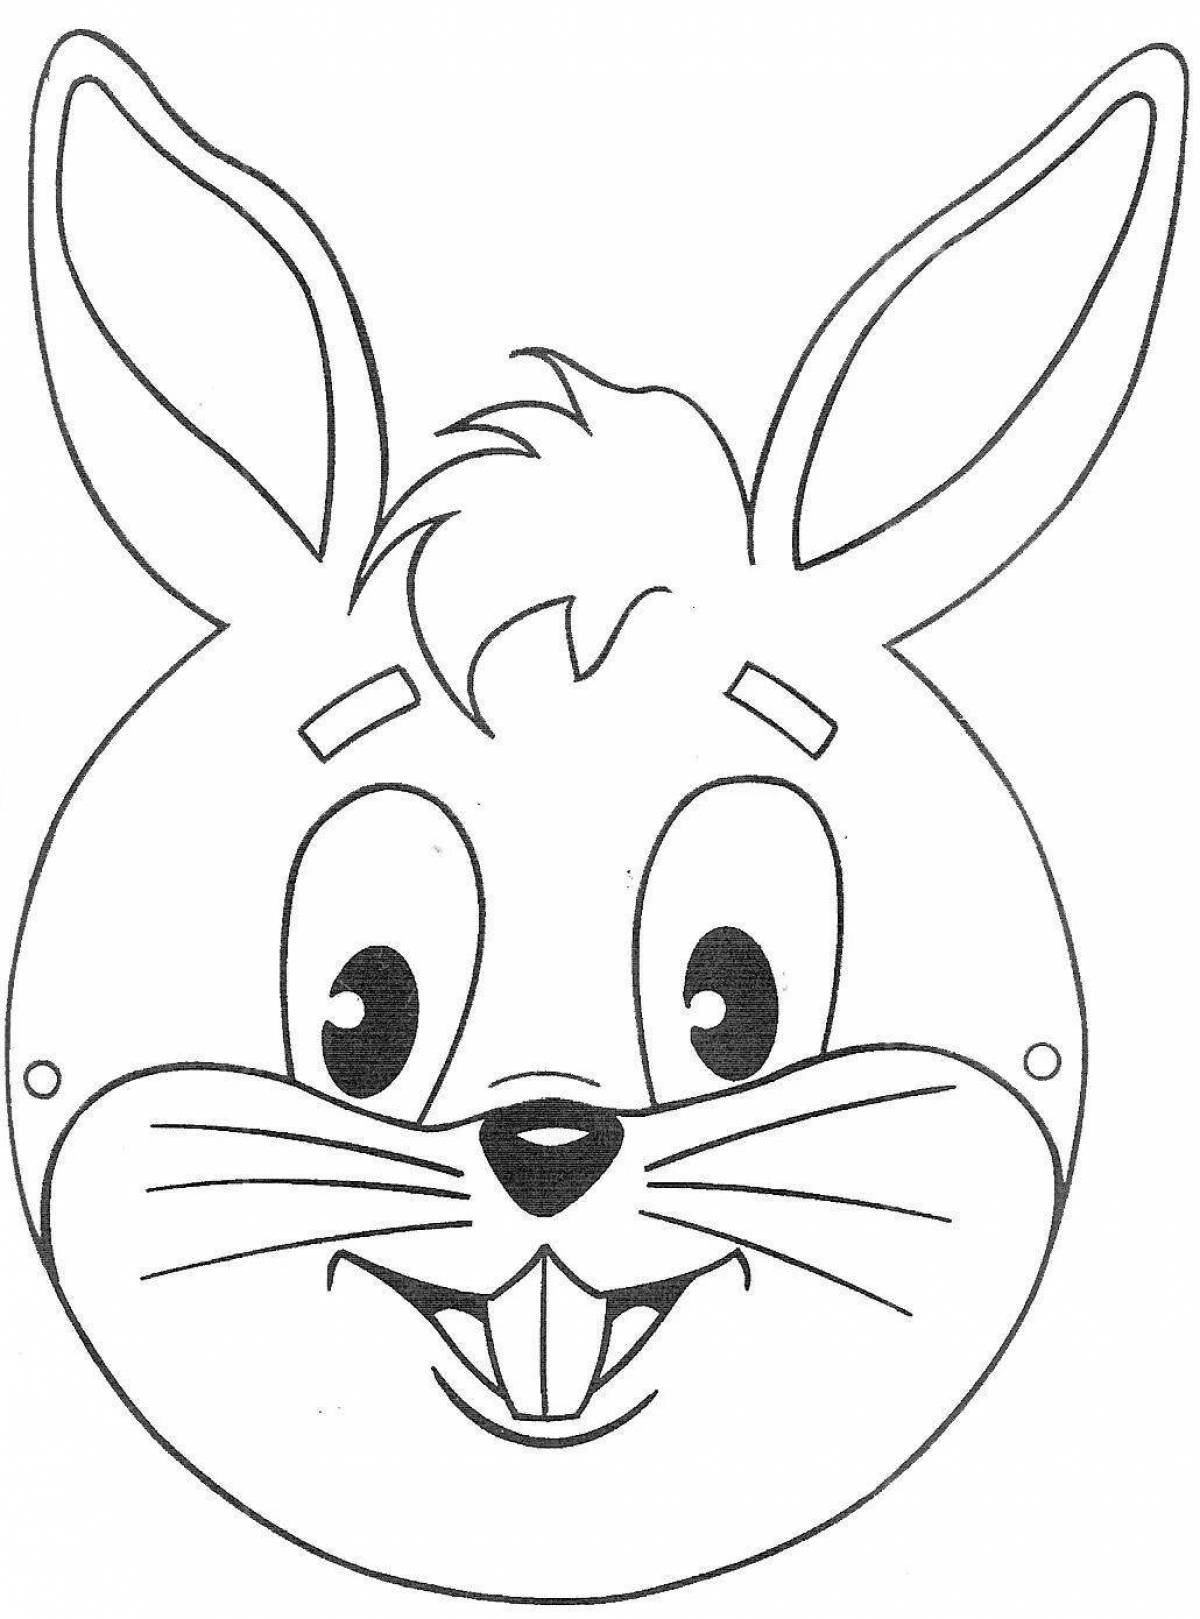 Coloring page joyful bunny mask